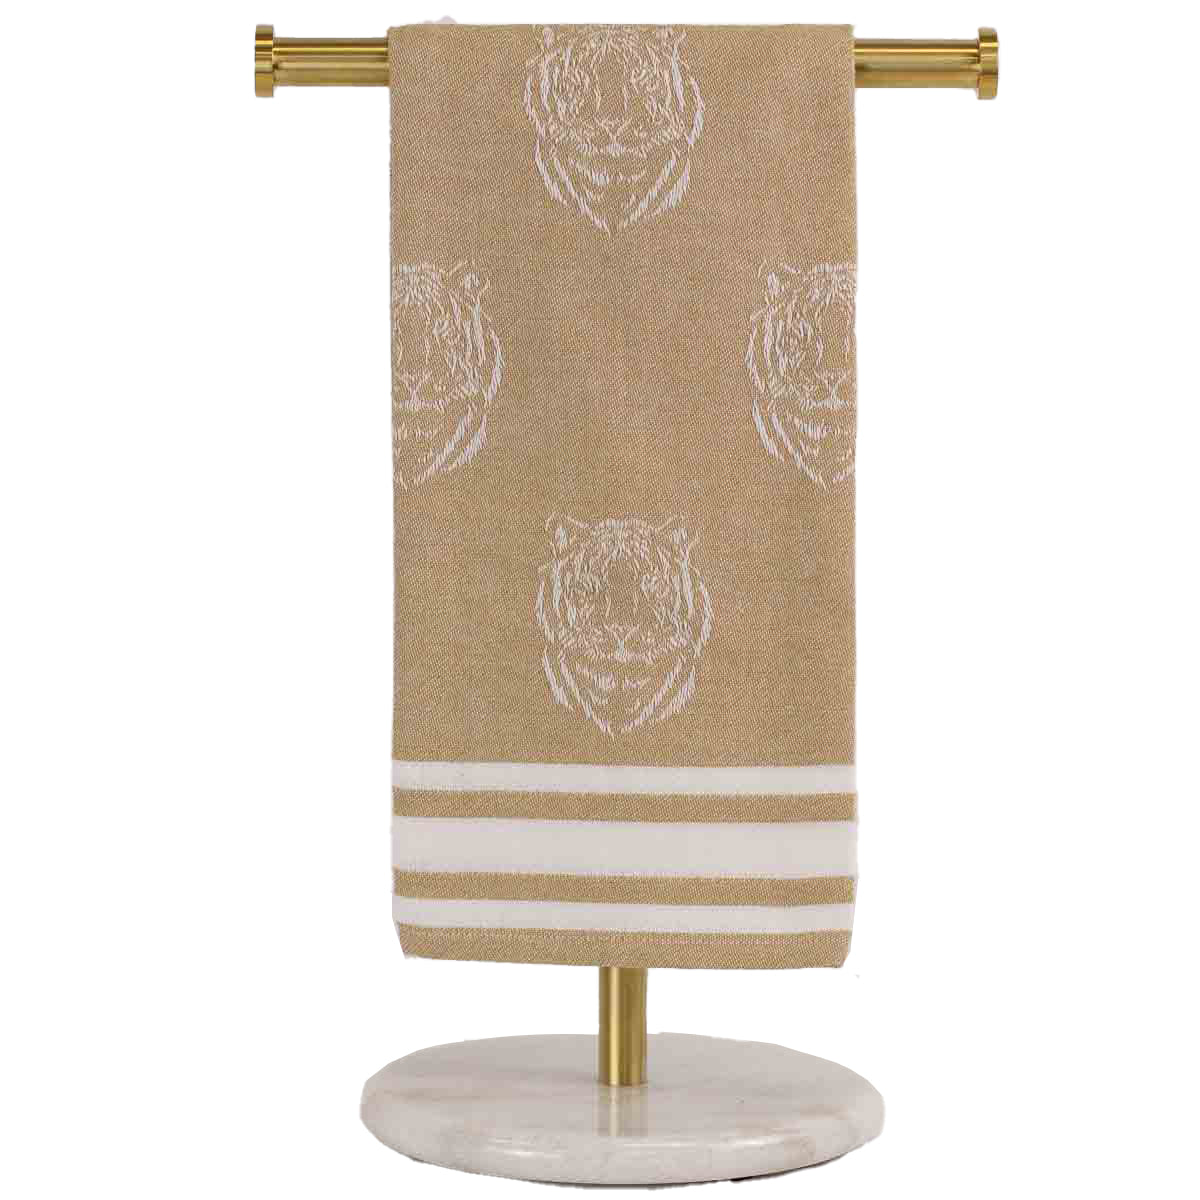 Jacquard Tiger Hand Towel in Light Gold